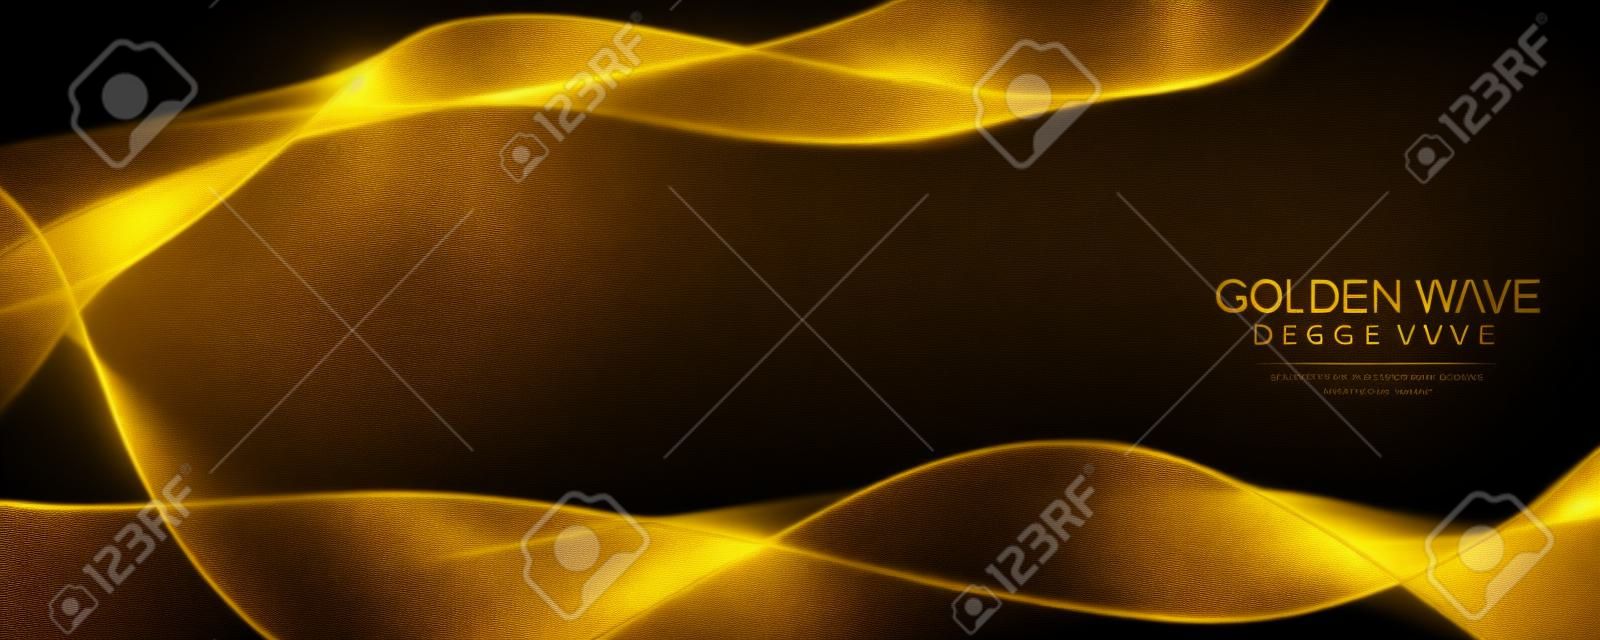 Luxury golden waves design on black background